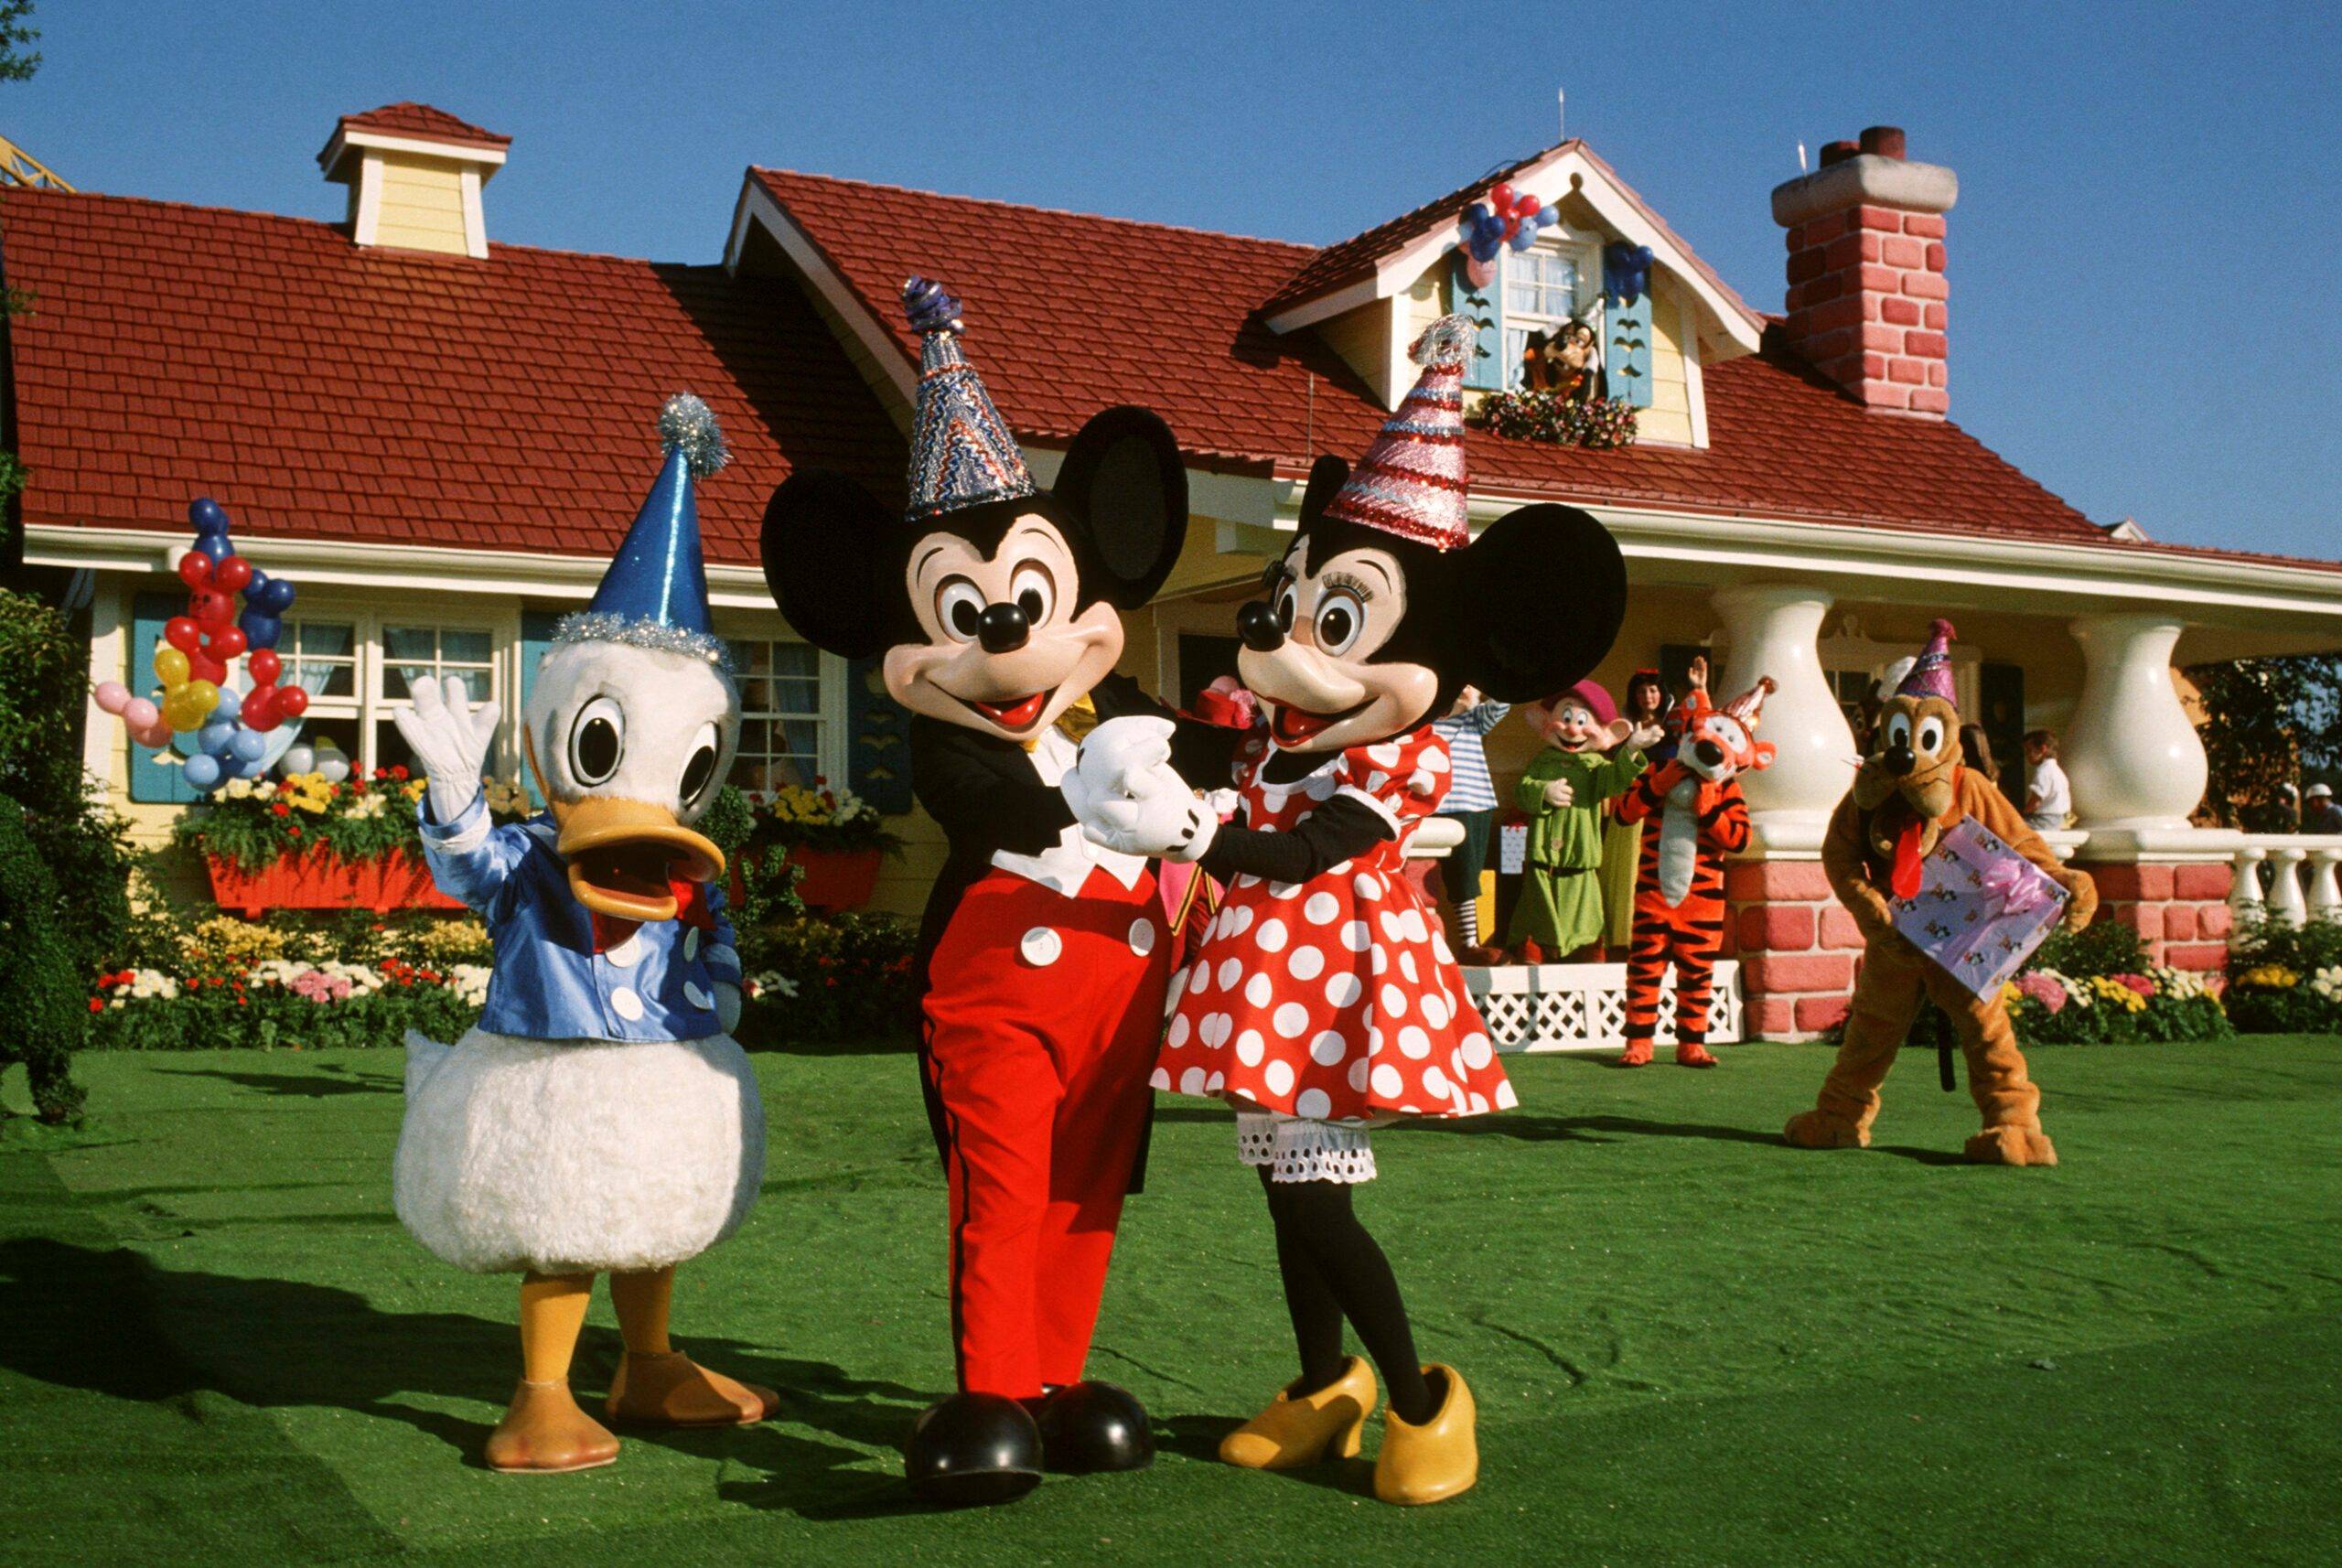 Mickey’s Birthdayland Party at Magic Kingdom Park in 1988 at Walt Disney World Resort